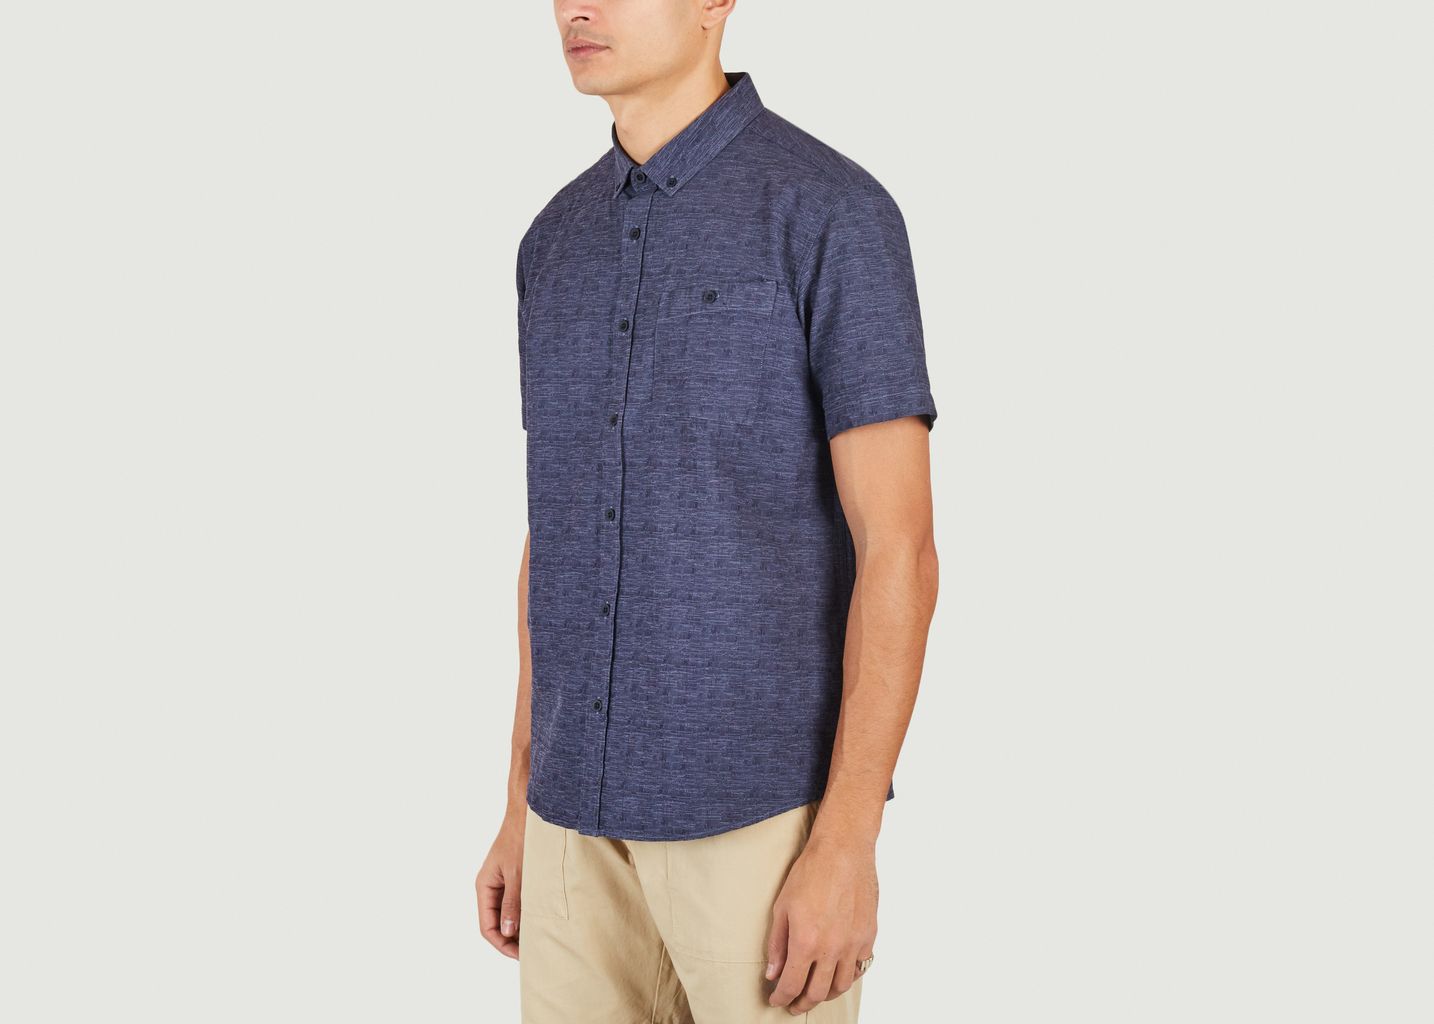 Eztitxu cotton short sleeve shirt - Bask in the Sun